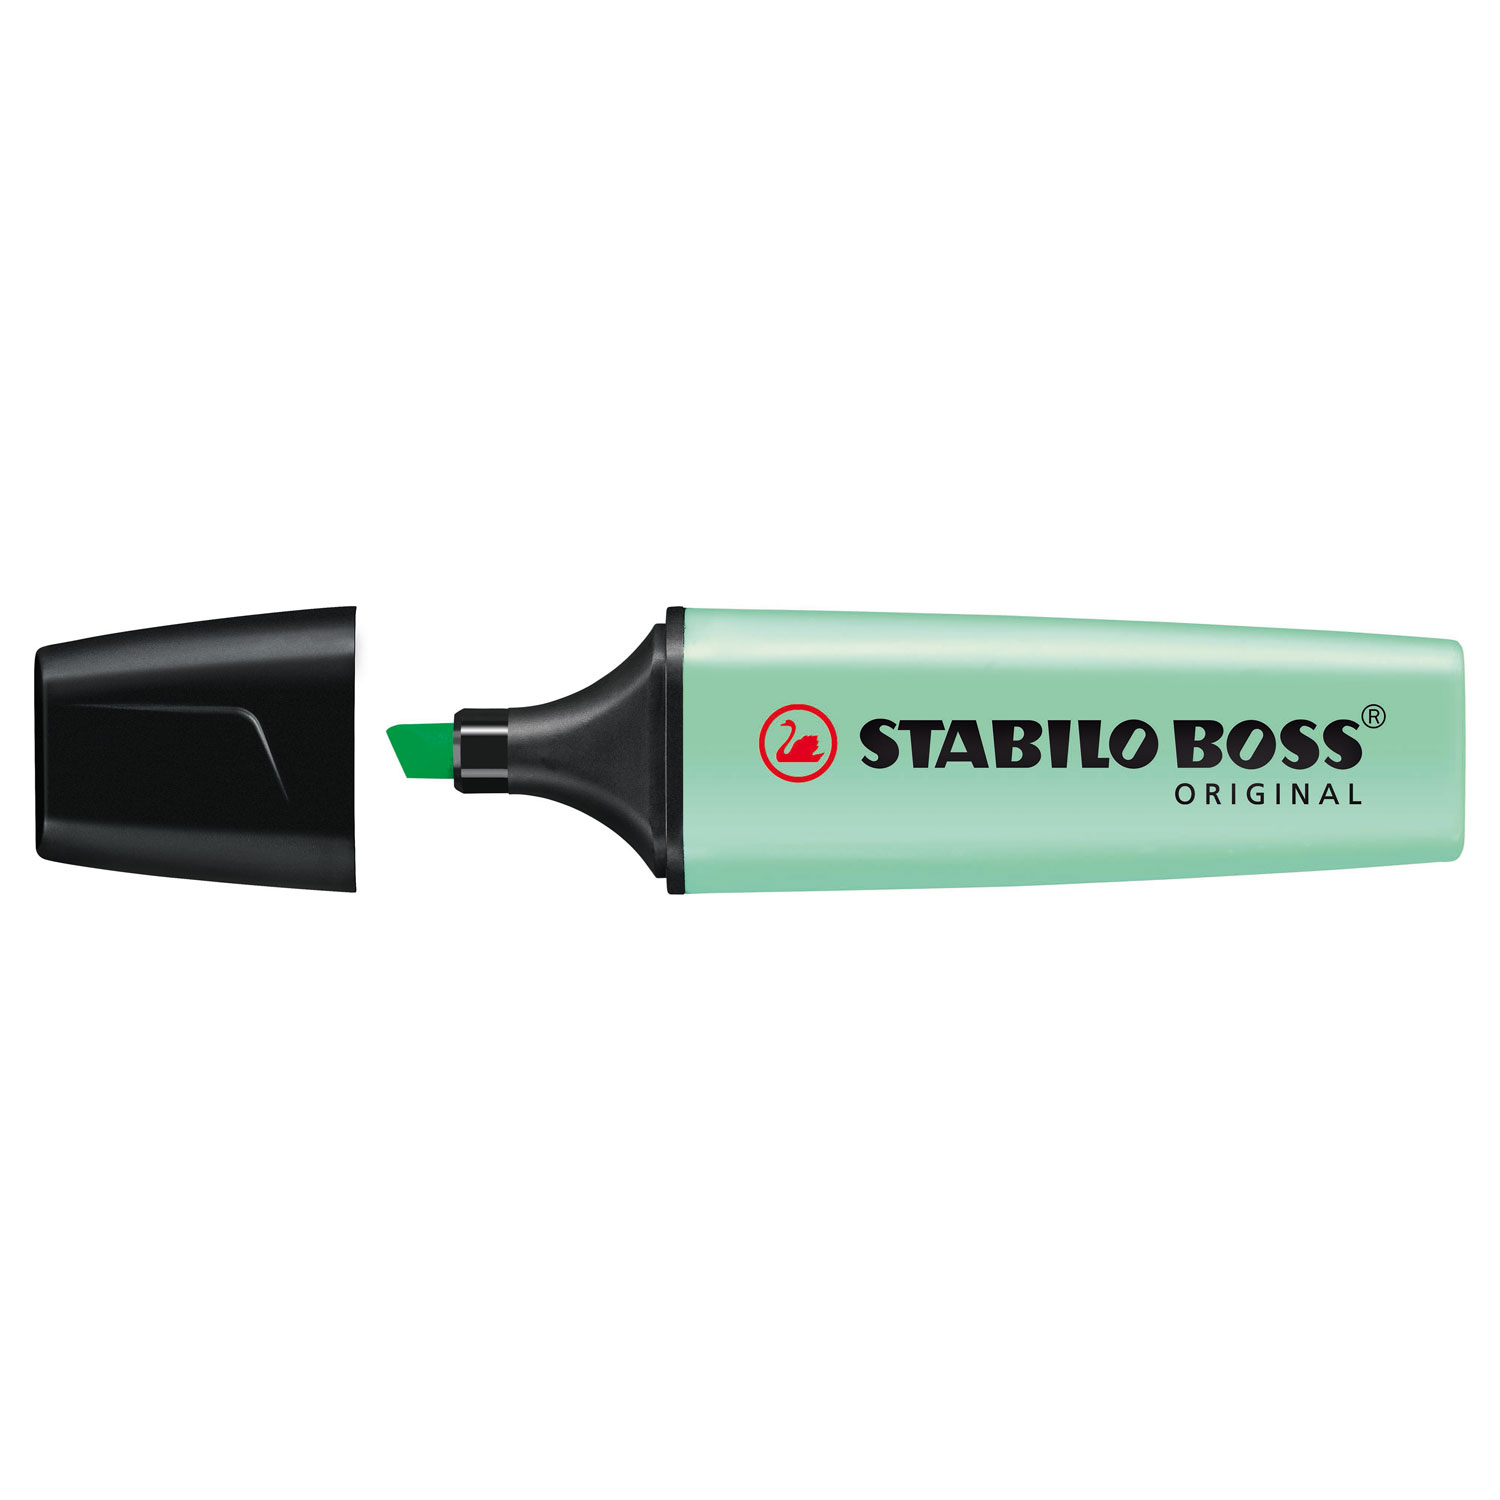 Stabilo Boss Original Pastel - Hint of Mint